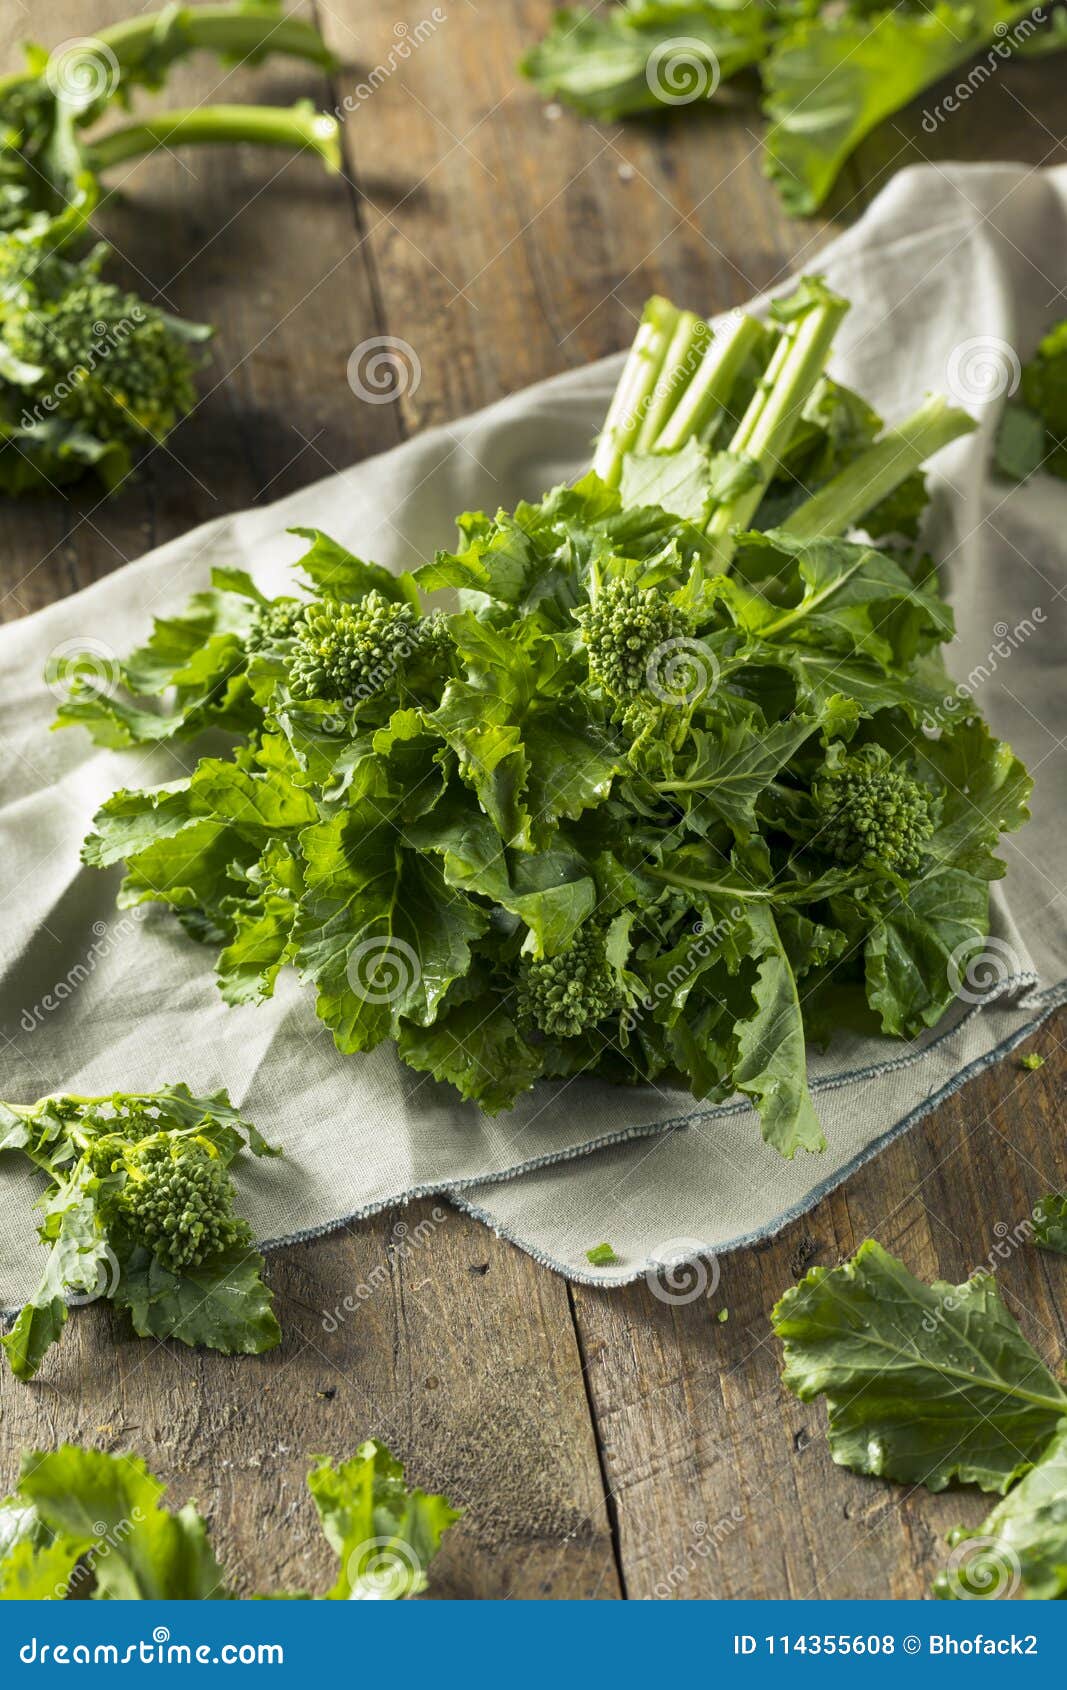 raw green organic broccoli rabe